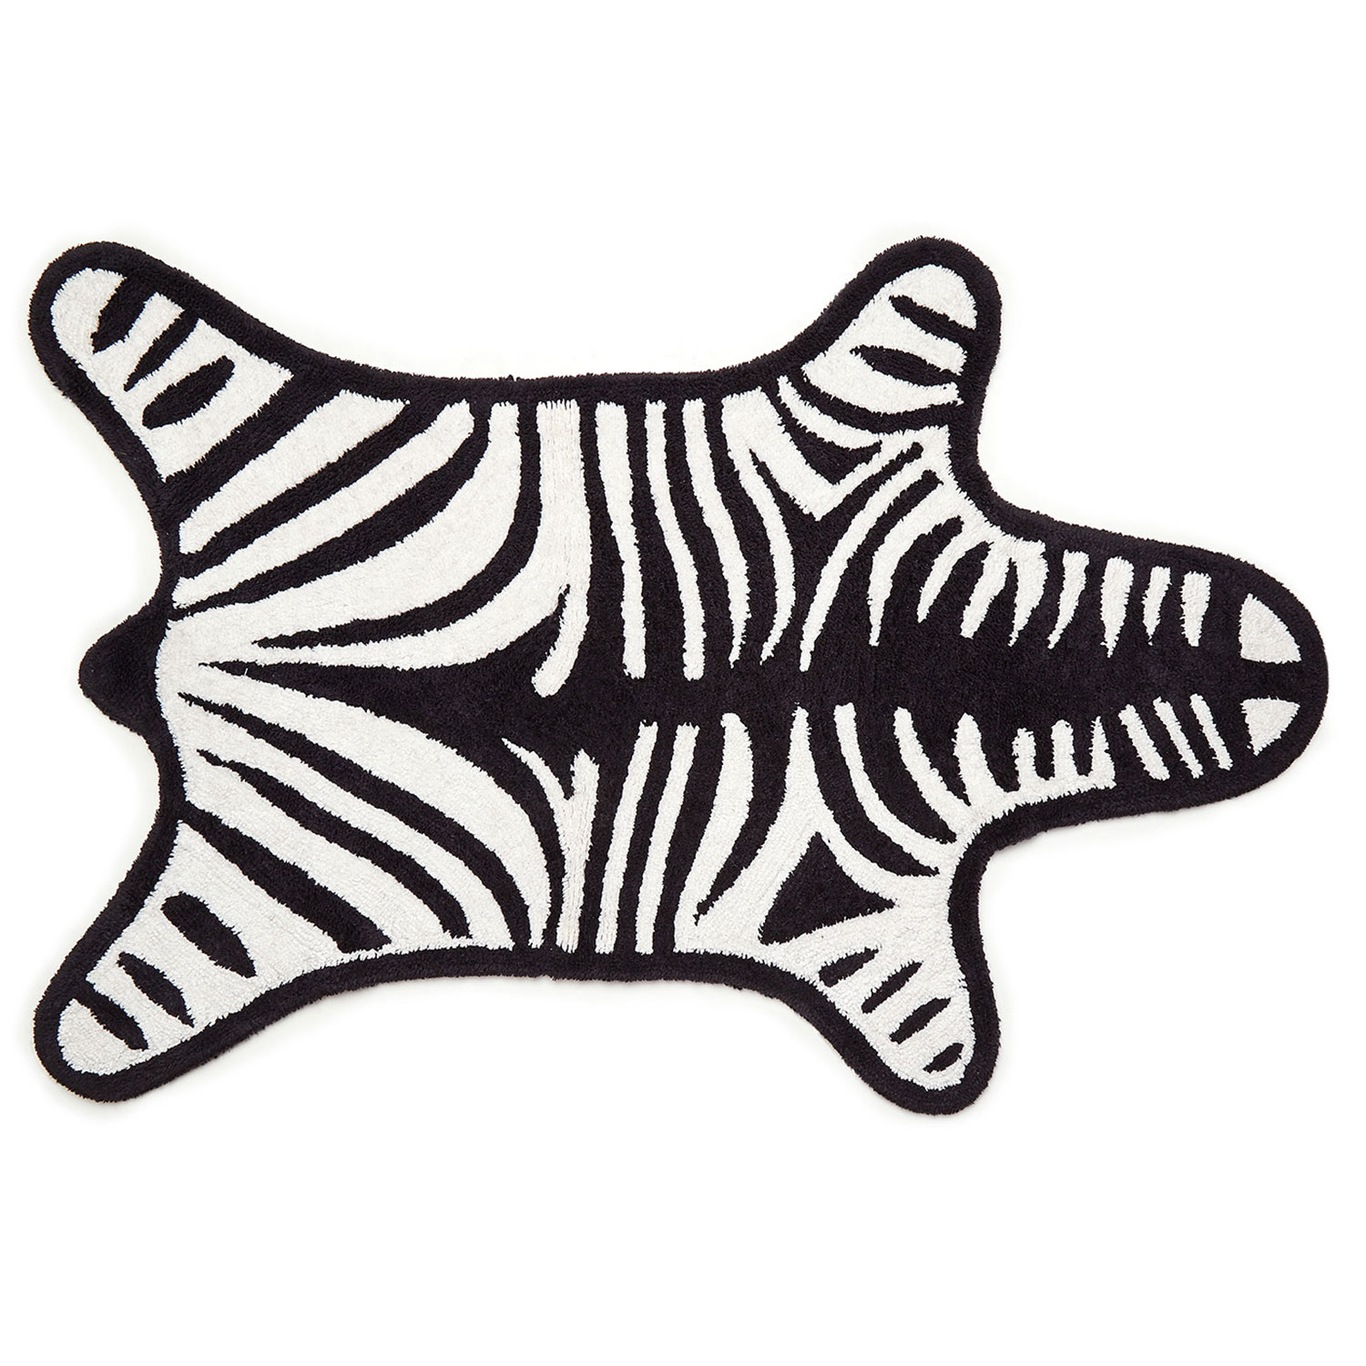 Zebra Bademåtte 79x112cm, Sort/Hvid